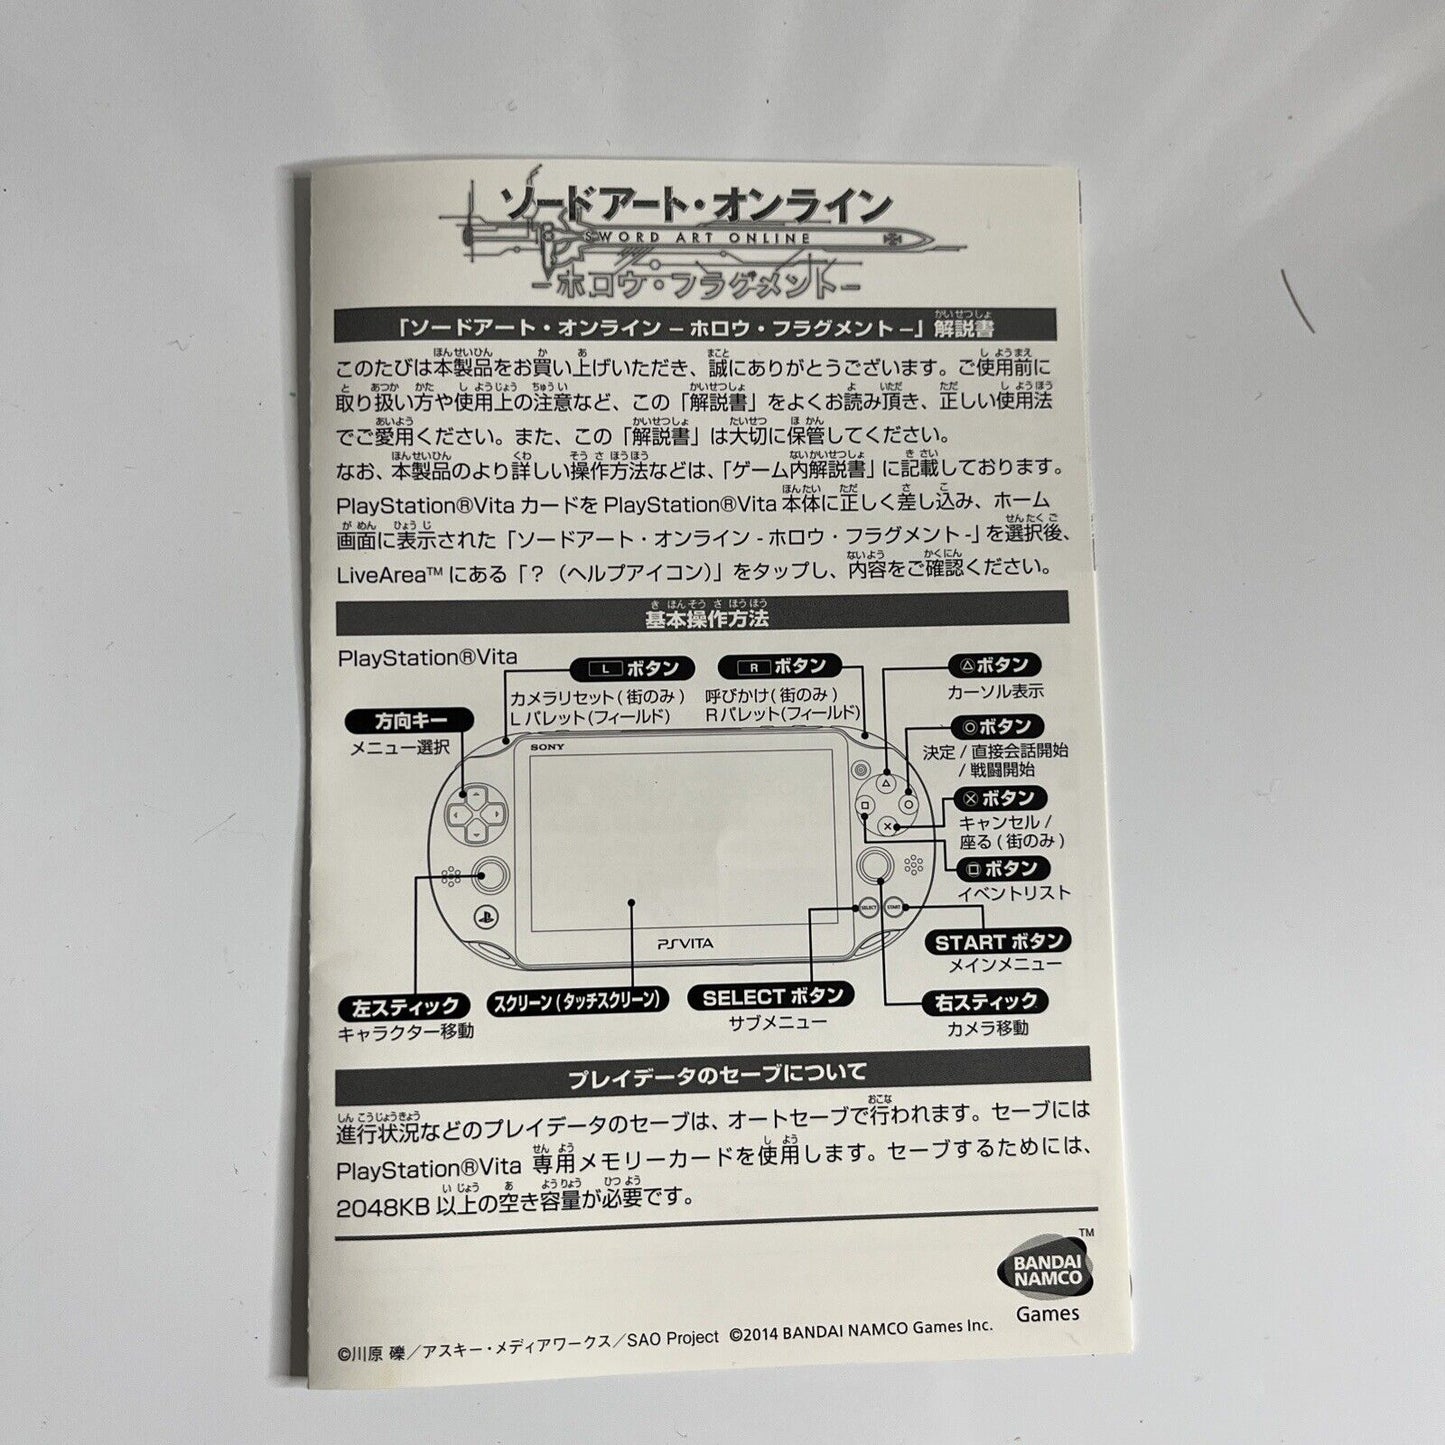 Japan Sword Art Online: Hollow Fragment Sony PS Vita PlayStation JAPAN Complete